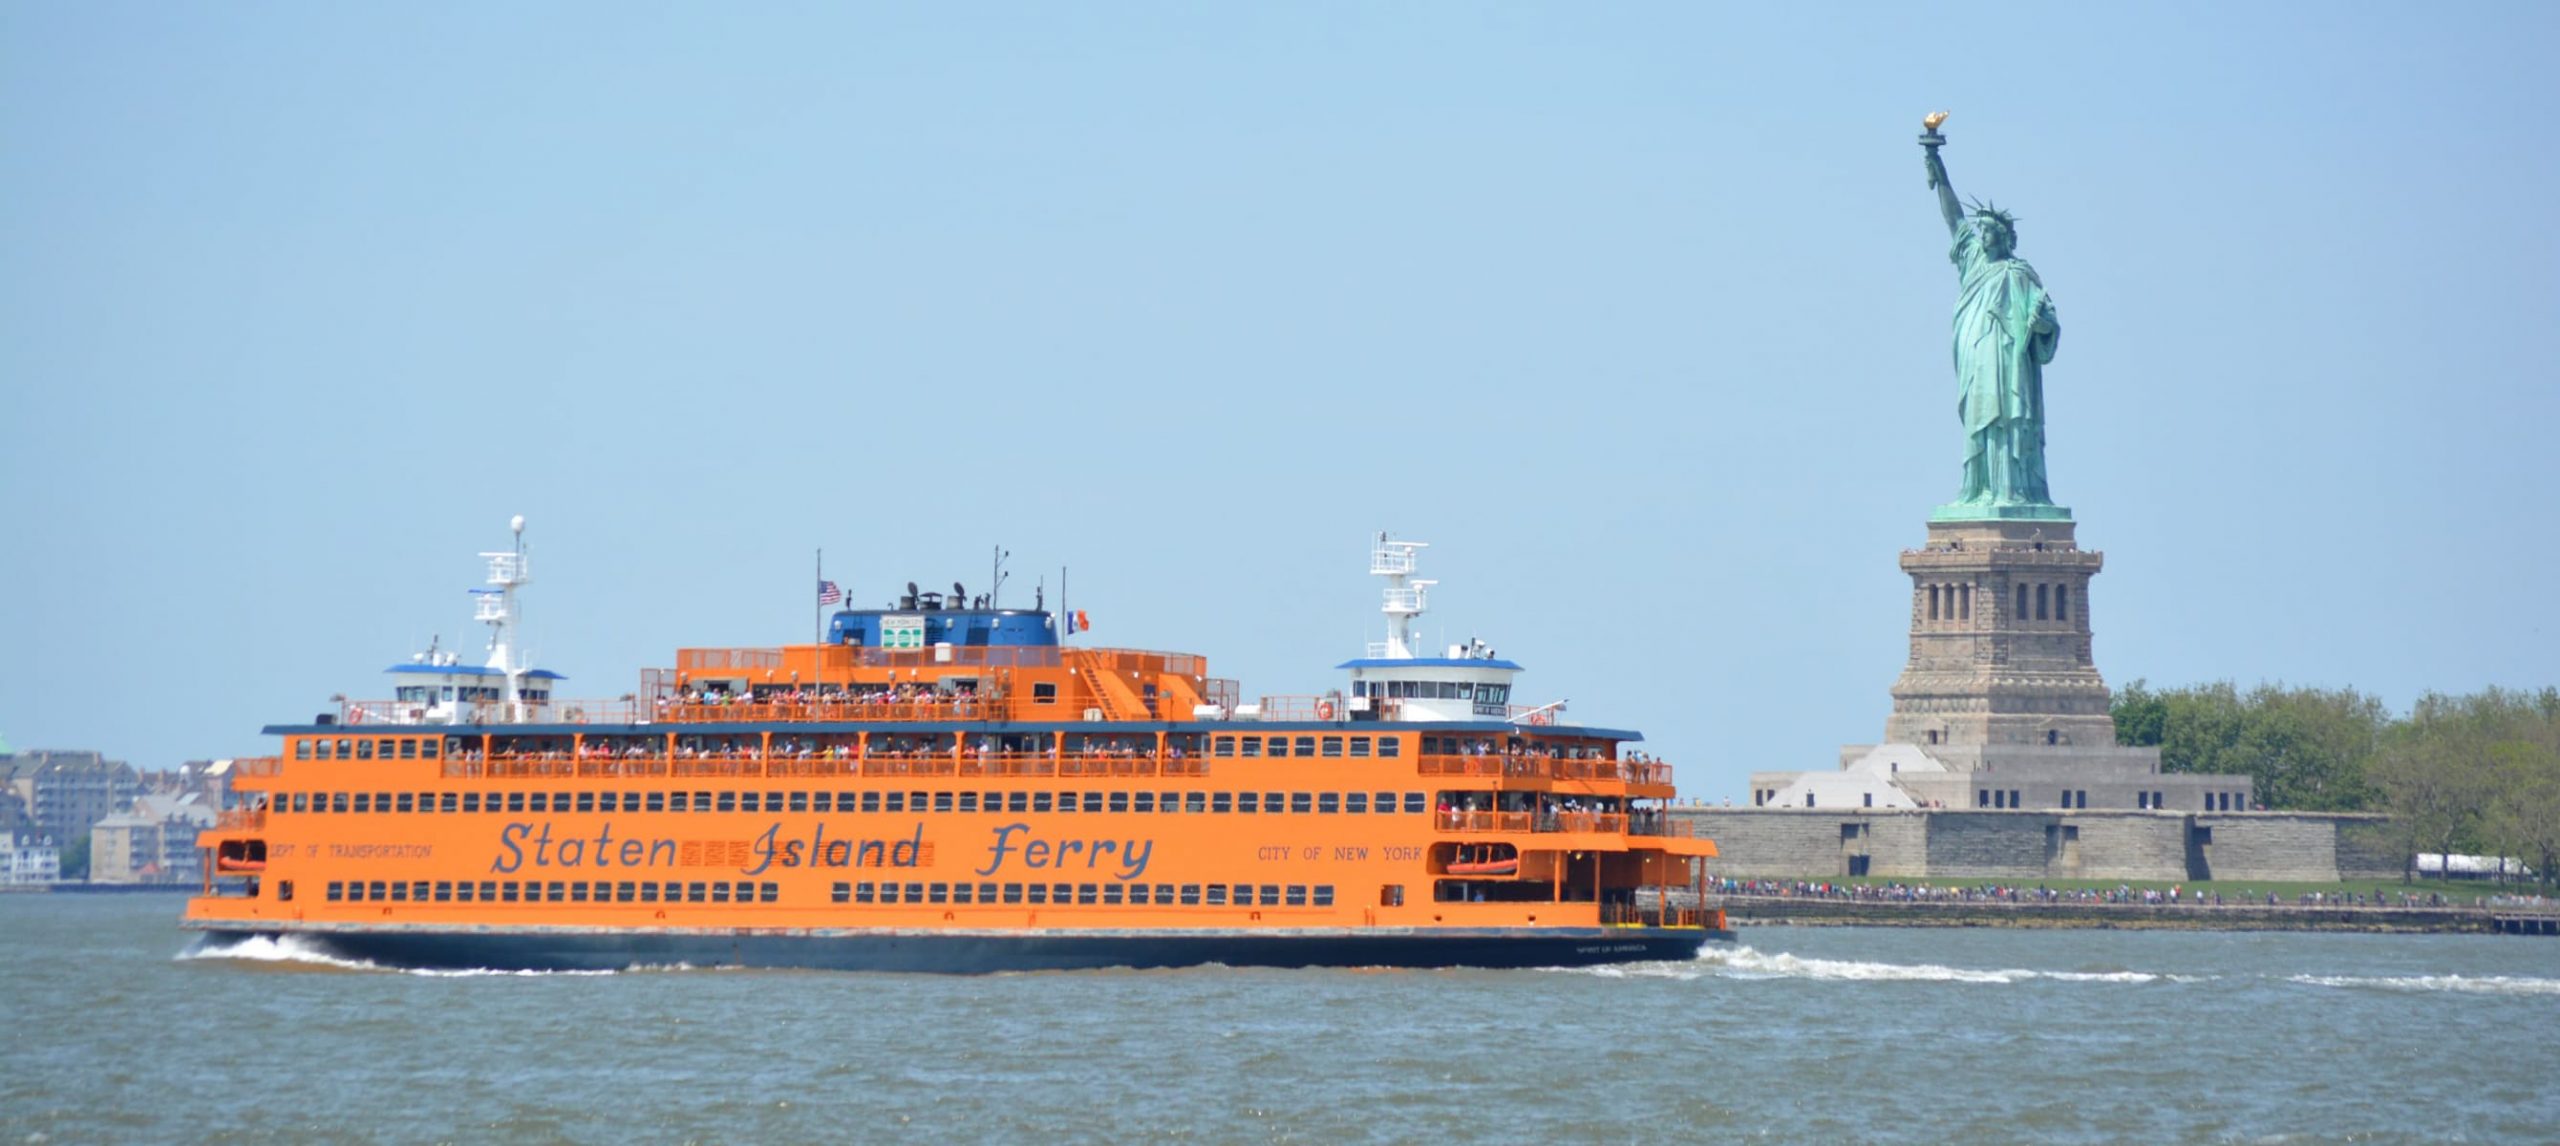 Staten Island Ferry passing by Lady Liberty